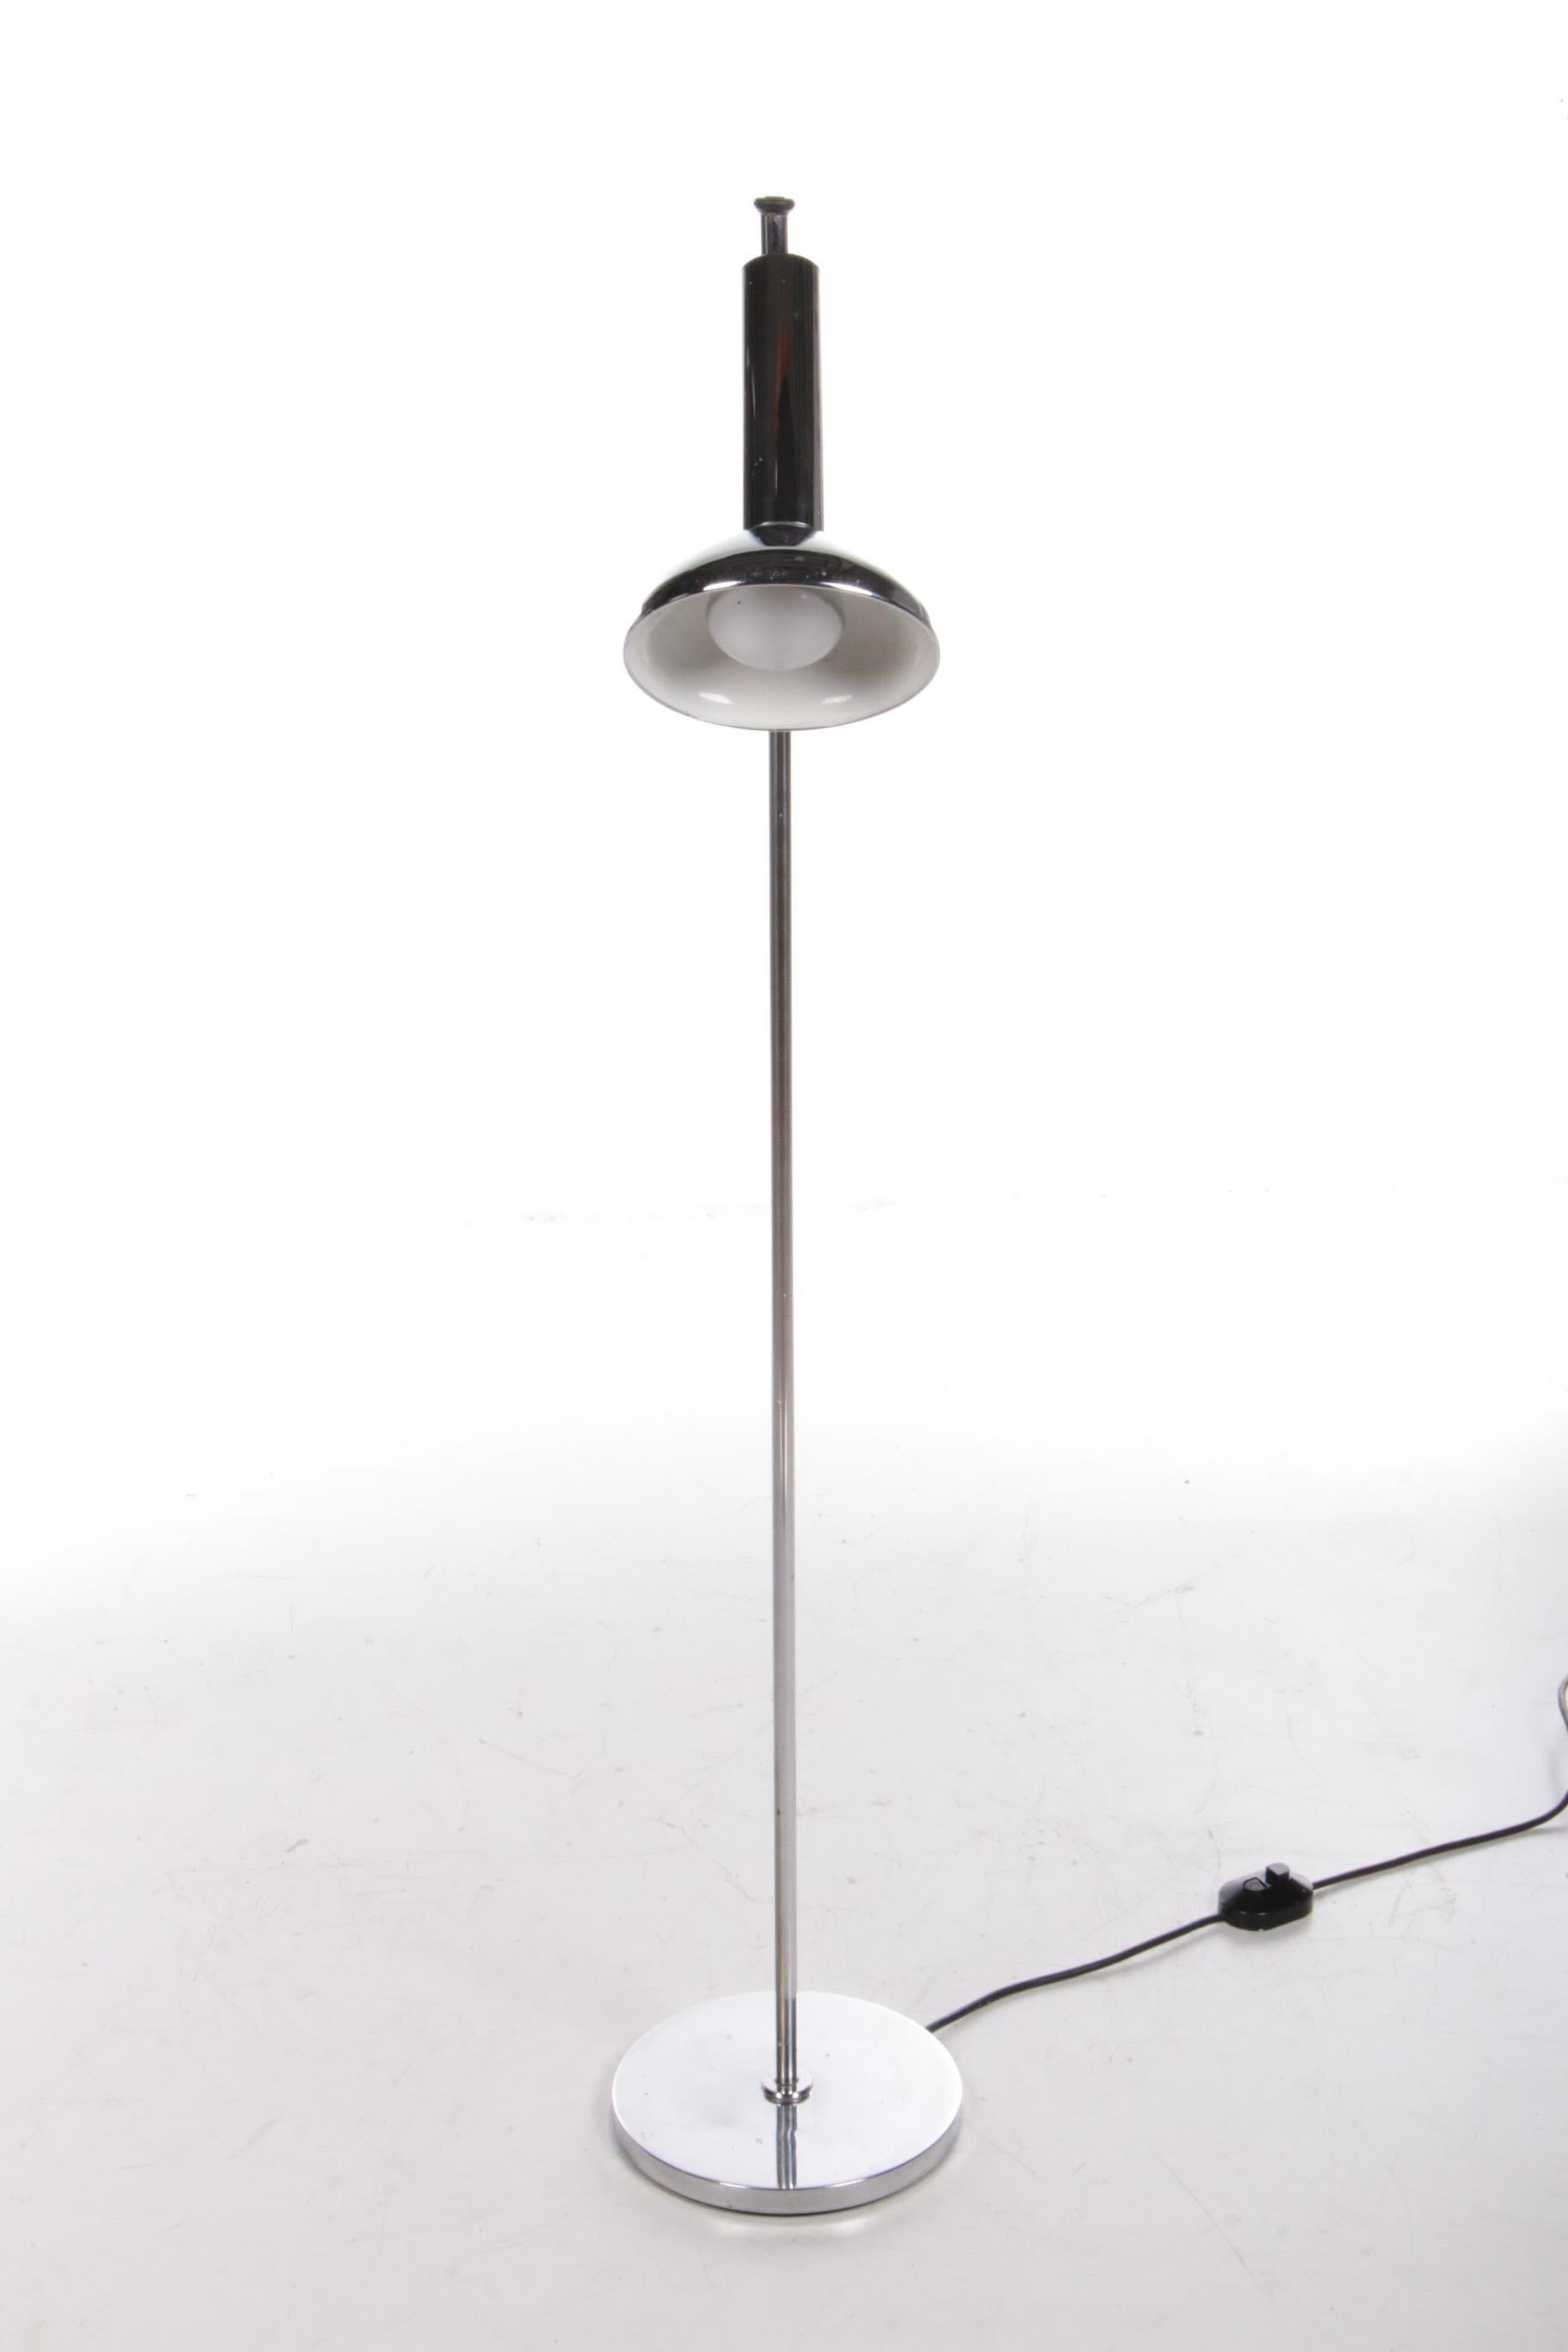 Vintage Chrome Floor Lamp with Adjustable Spot, 1960s German 1